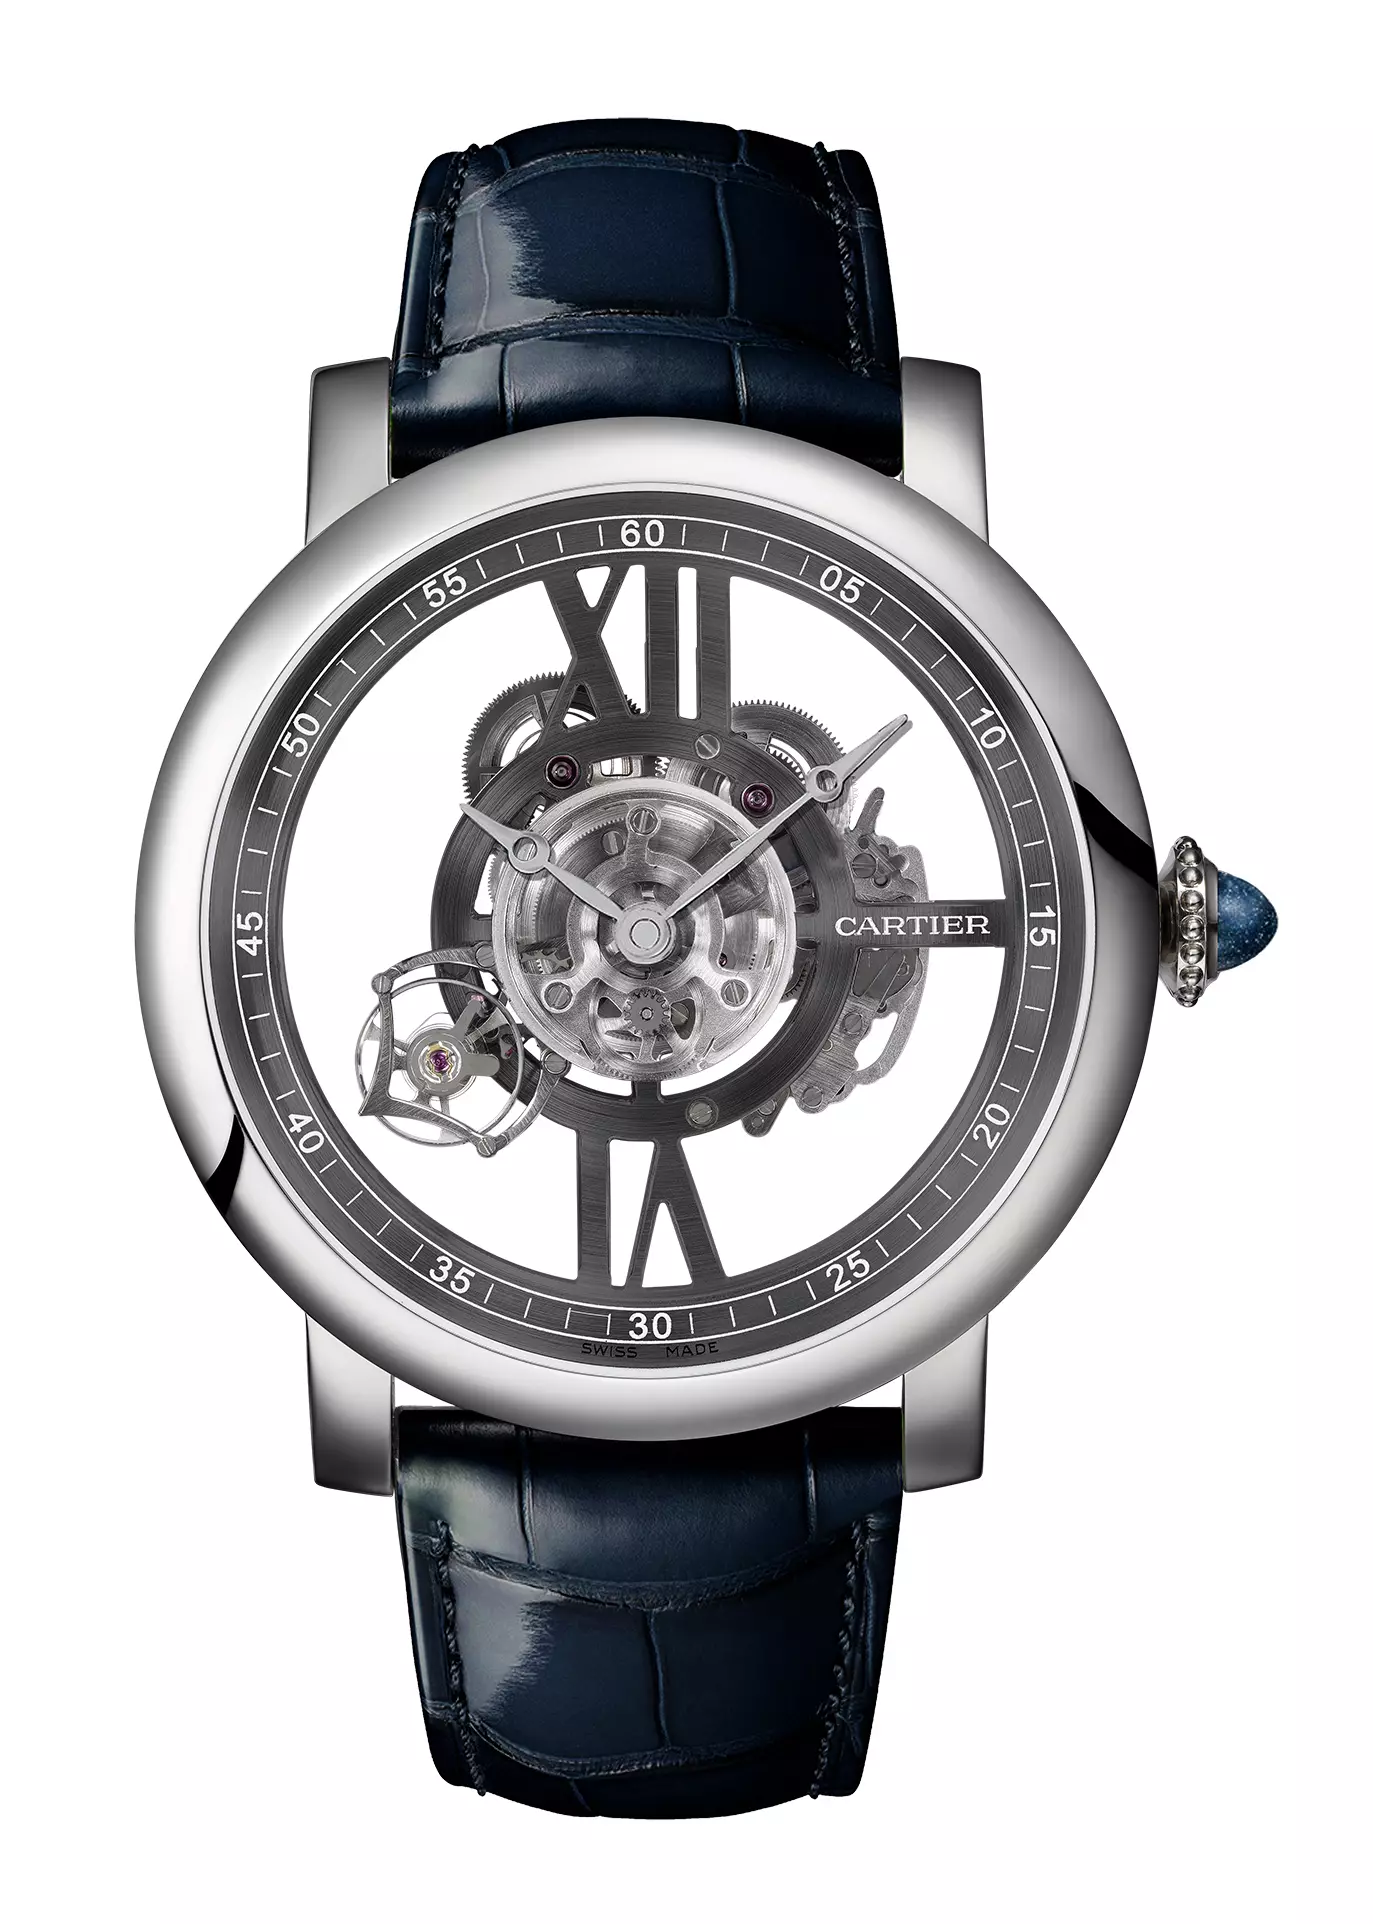 Colección Cartier de Alta Relojería